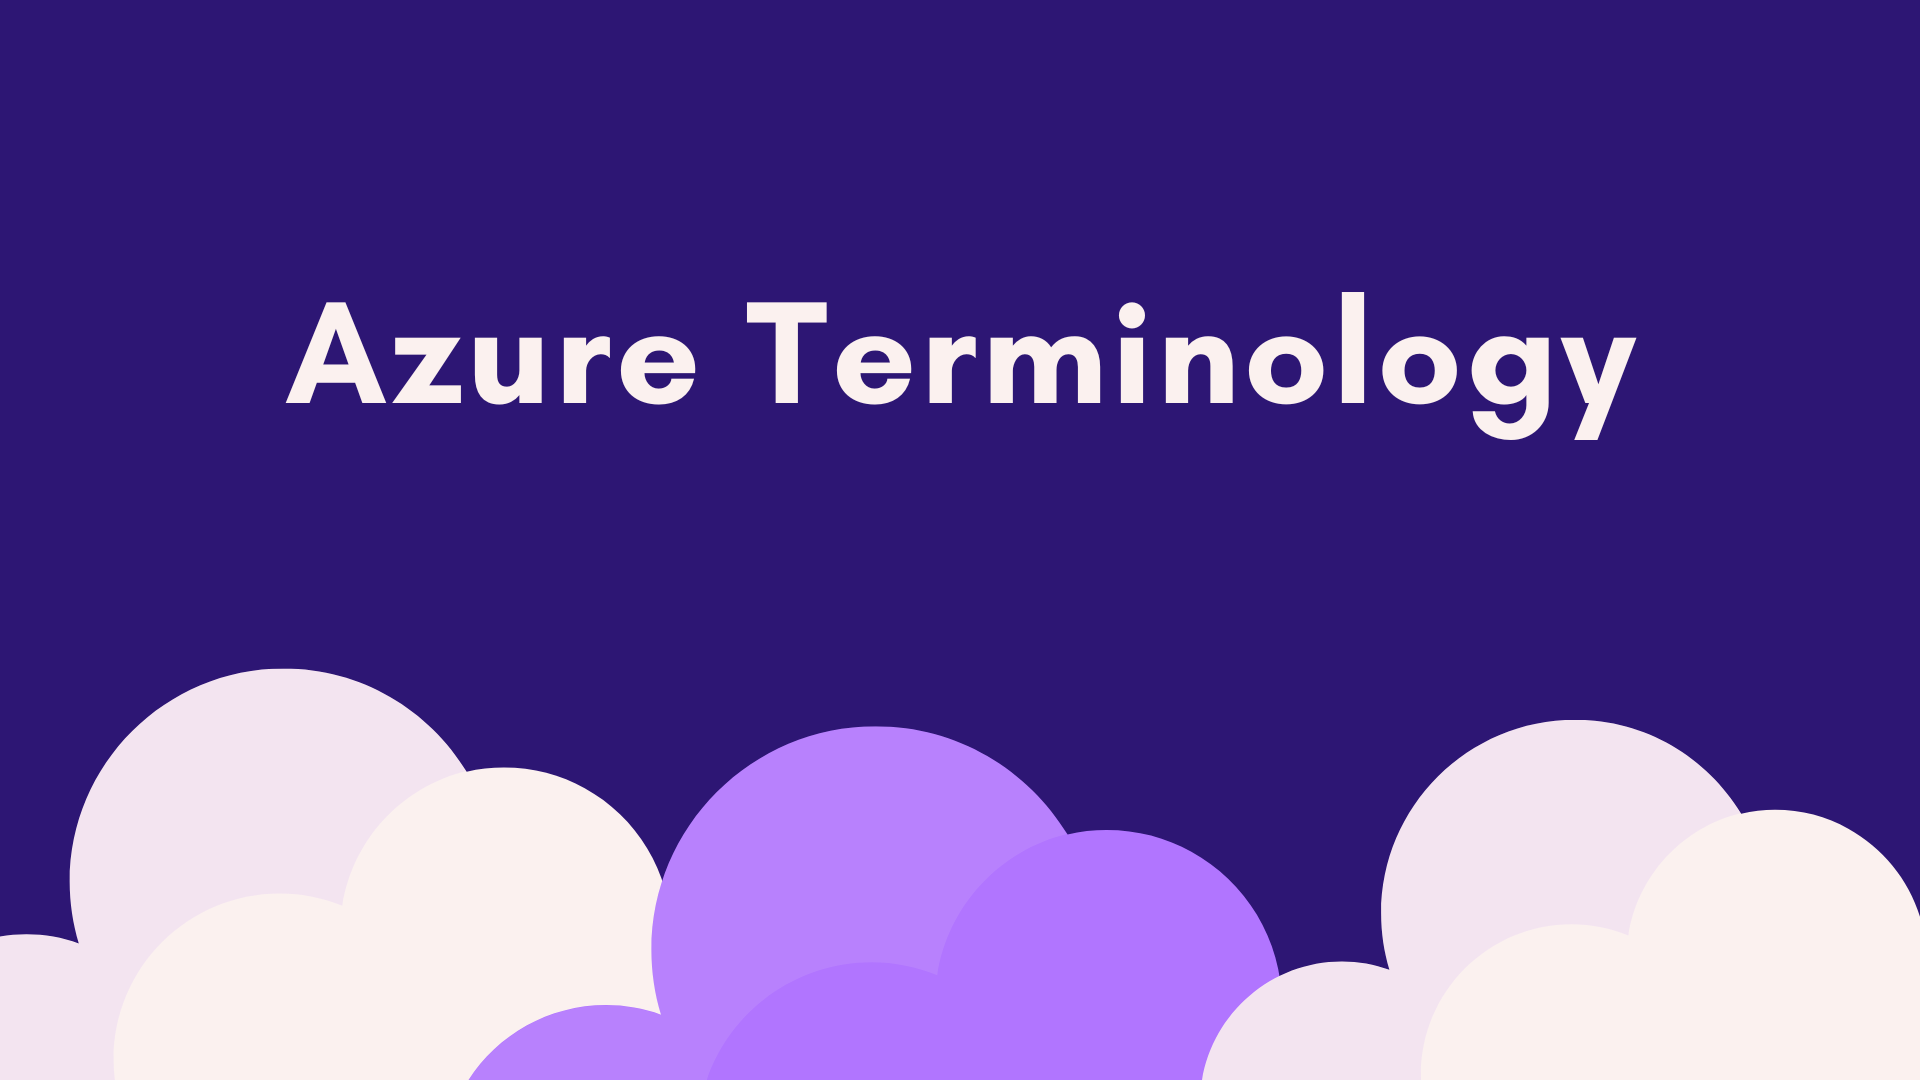 Azure Terminology